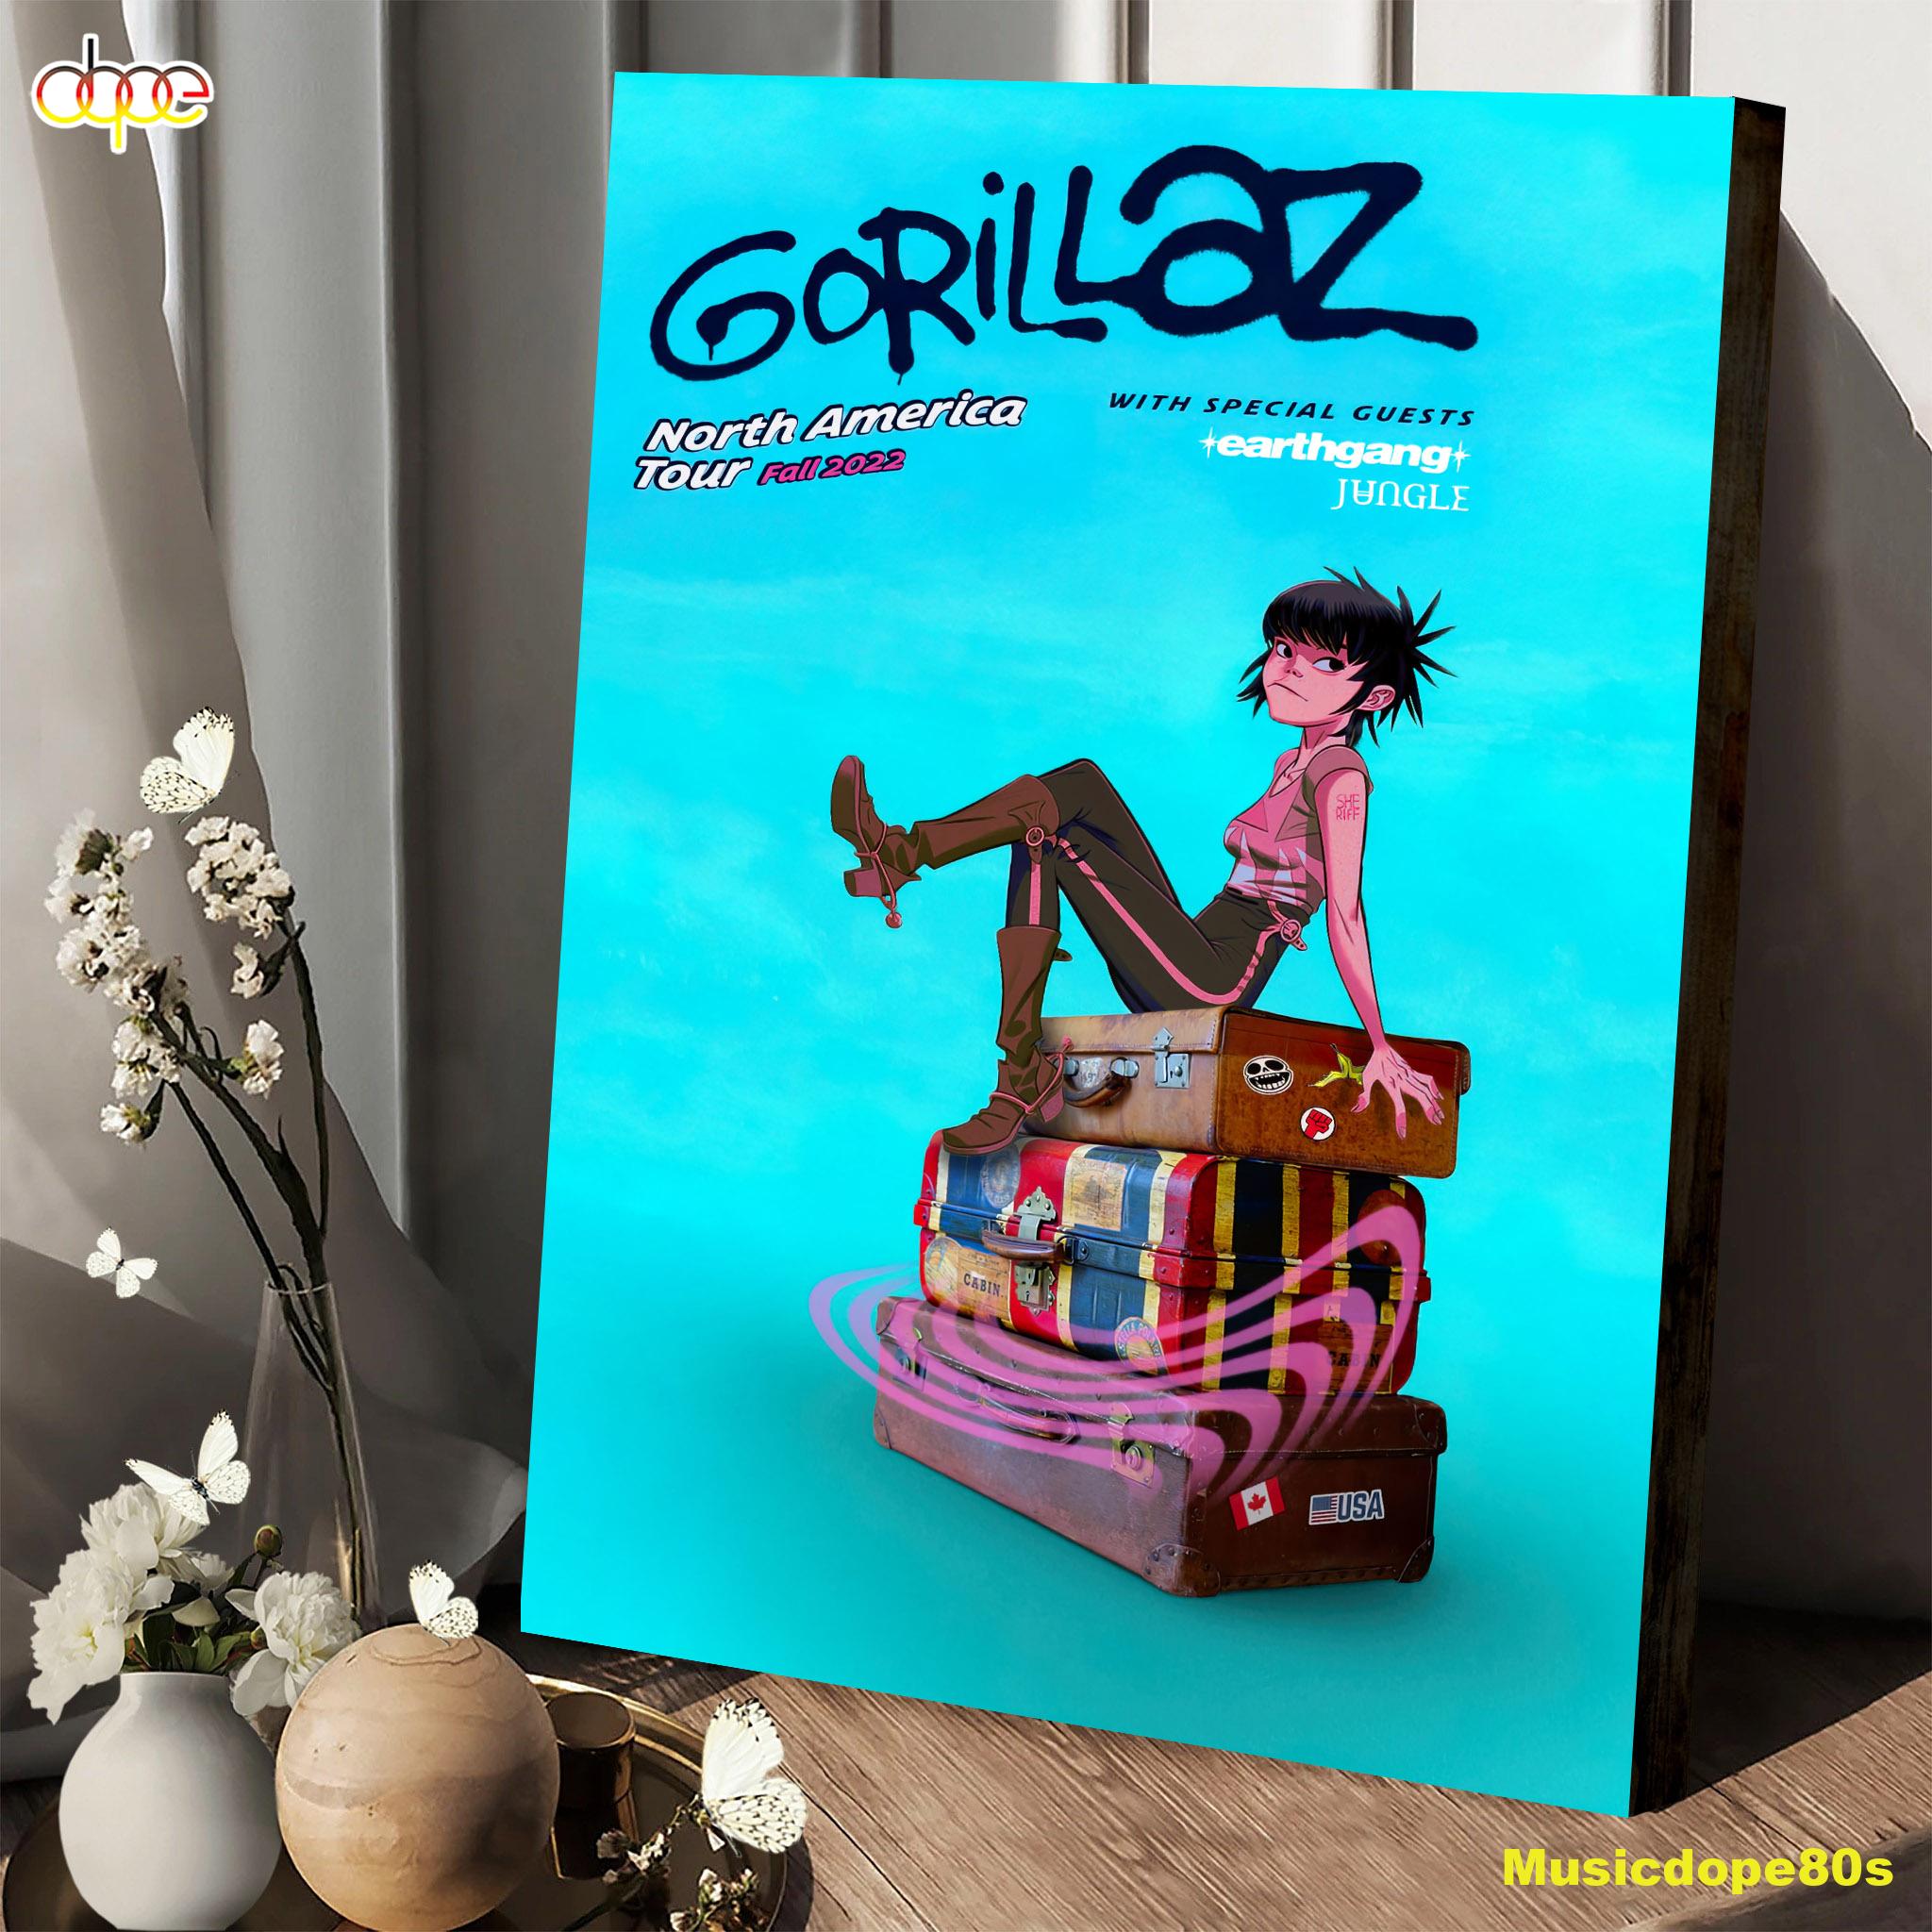 Gorillaz Tour Dates 2022-2023, Gorillaz Are Coming Poster Canvas